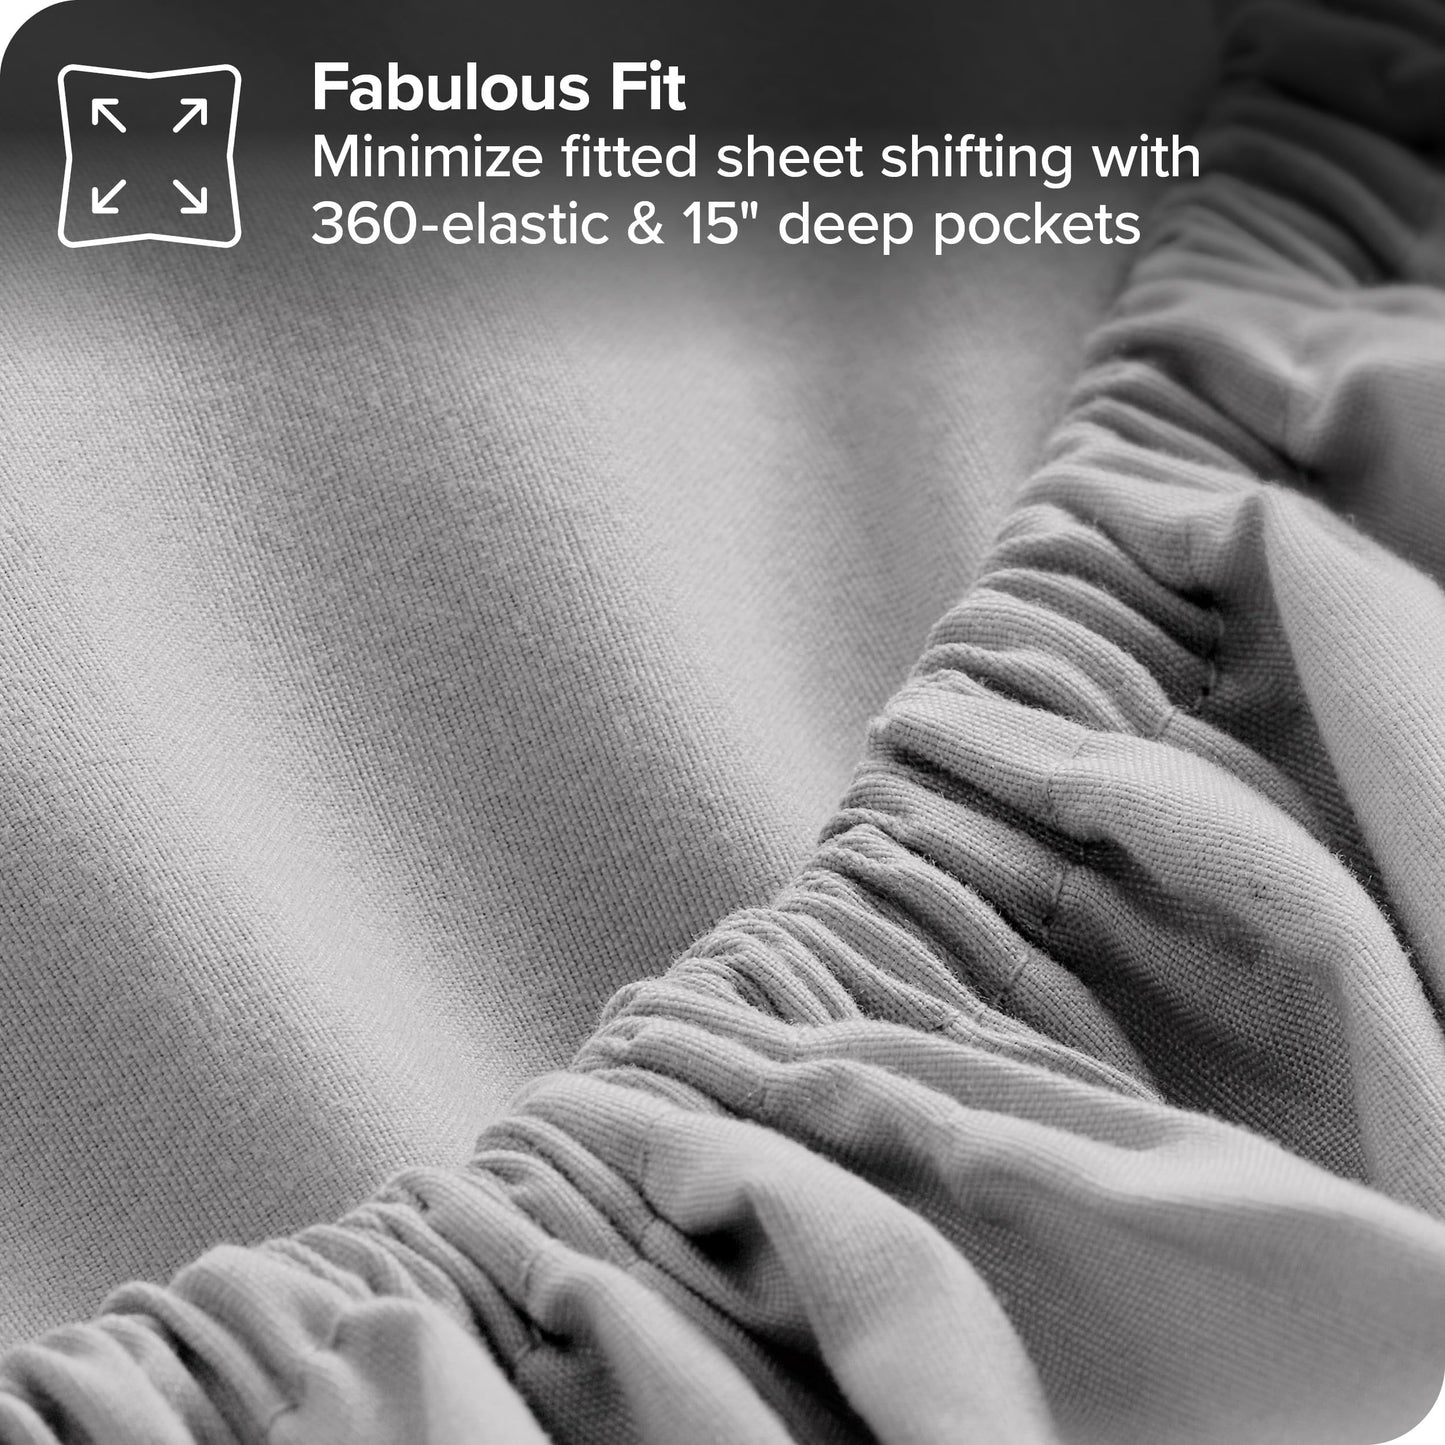 Bare Home Bed-in-A-Bag 7 Piece Comforter & Sheet Set - Queen - Goose Down Alternative - Ultra-Soft 1800 Premium Bedding Set (Queen, Grey/Light Grey)